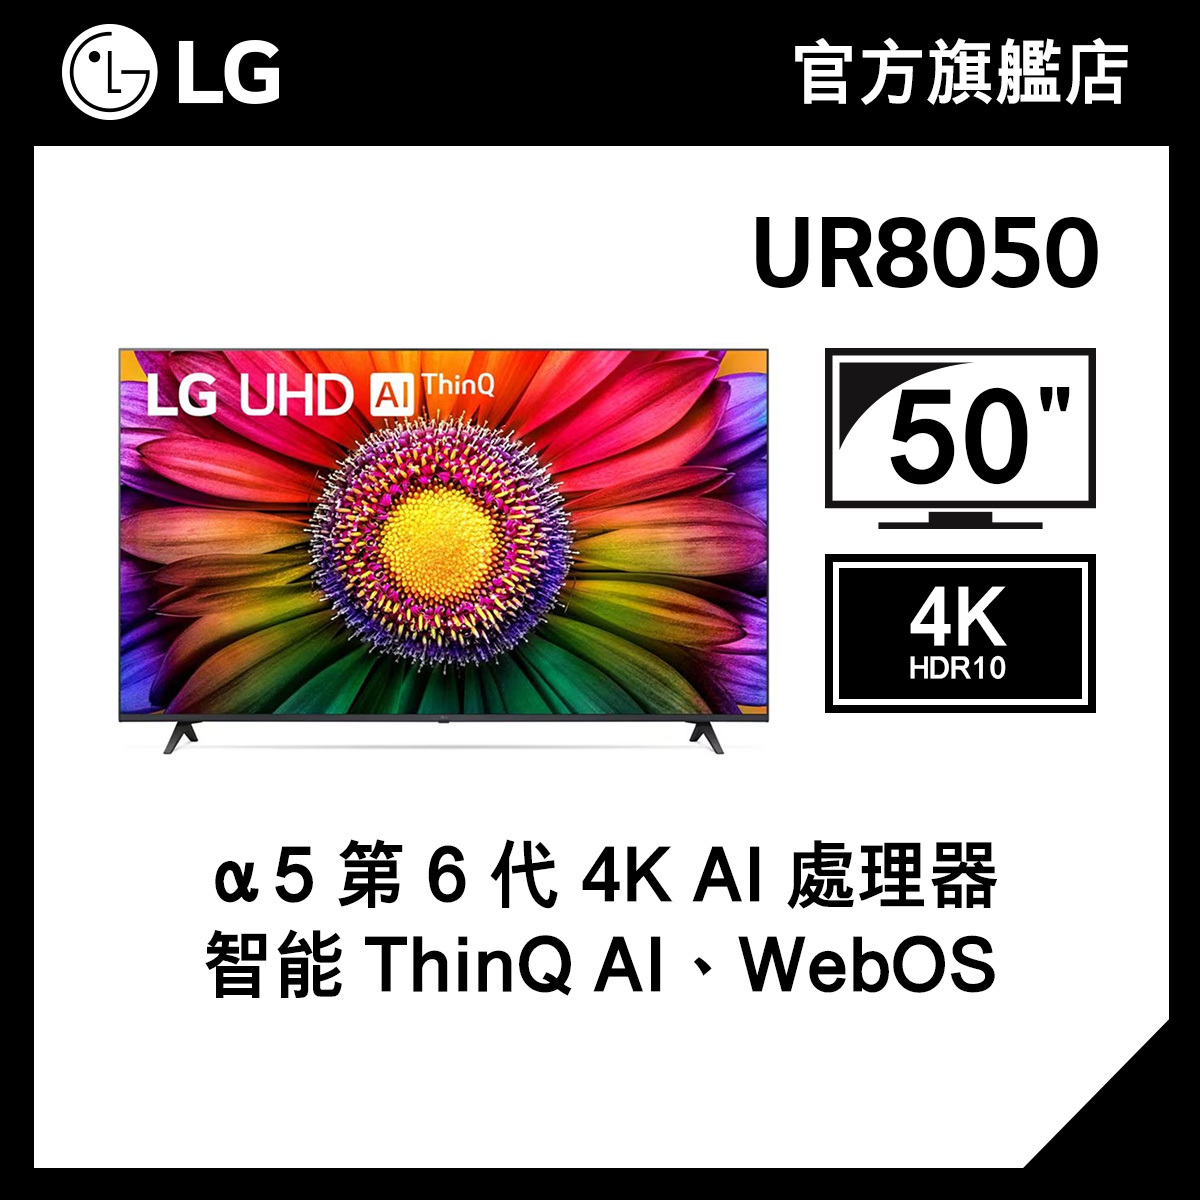 LG 50" UHD 4K 智能電視 UR8050